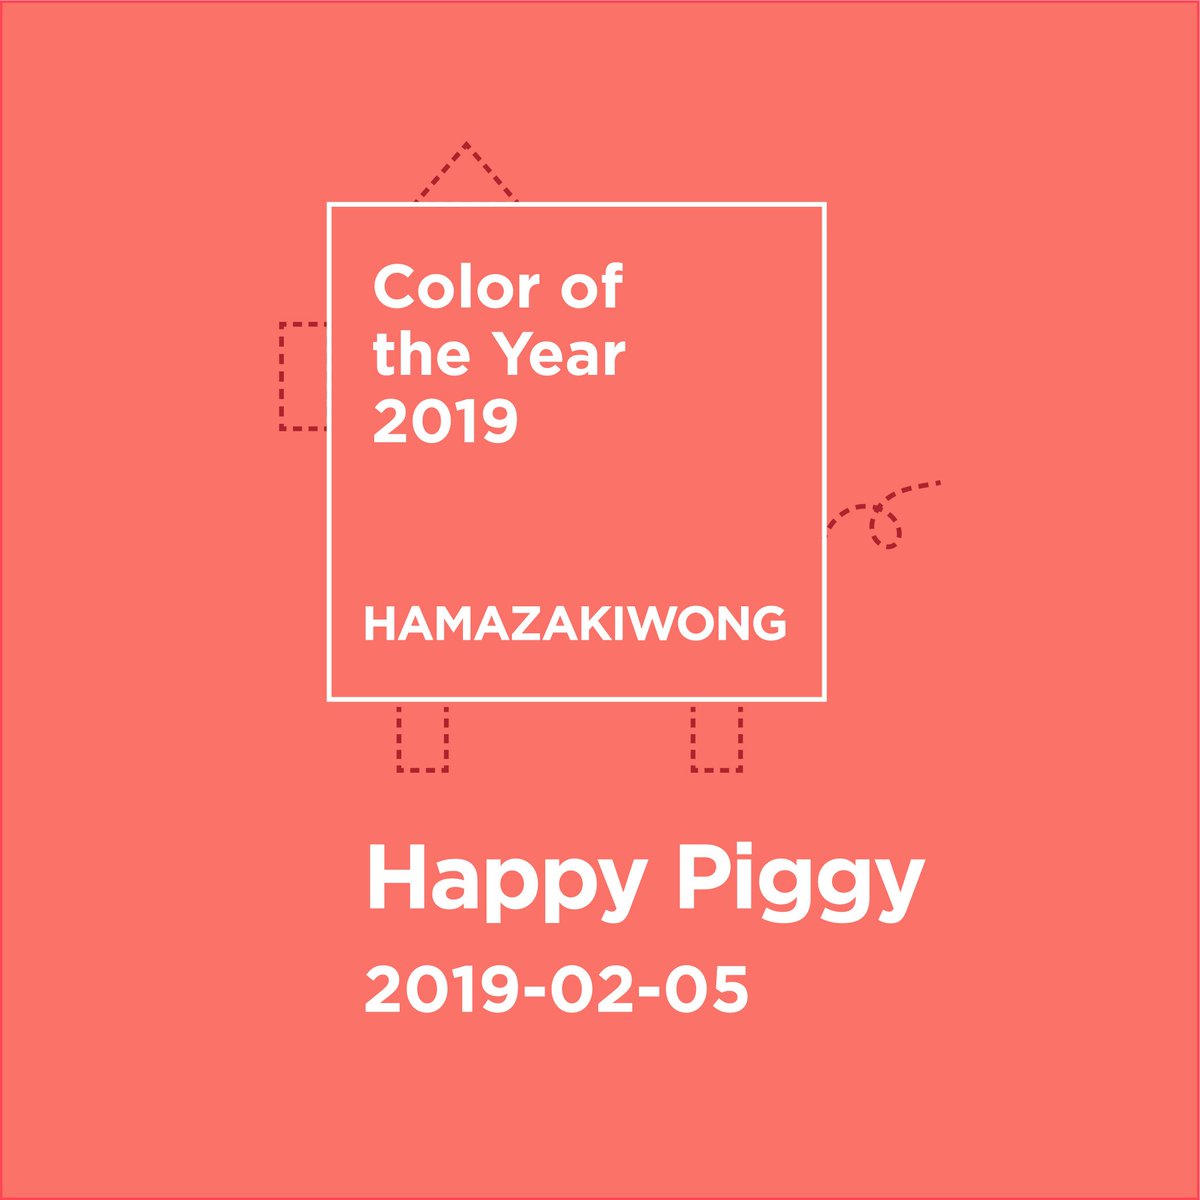 Our take on @pantone's #ColourOfTheYear. Happy #YearOfThePig!
.
.
.
.
.
#ChineseNewYear #CNY #CNY2019 #LNY #LNY2019 #LunarNewYear #AsianMarketing #multiculturalmarketing #creative #colouroftheyear2019